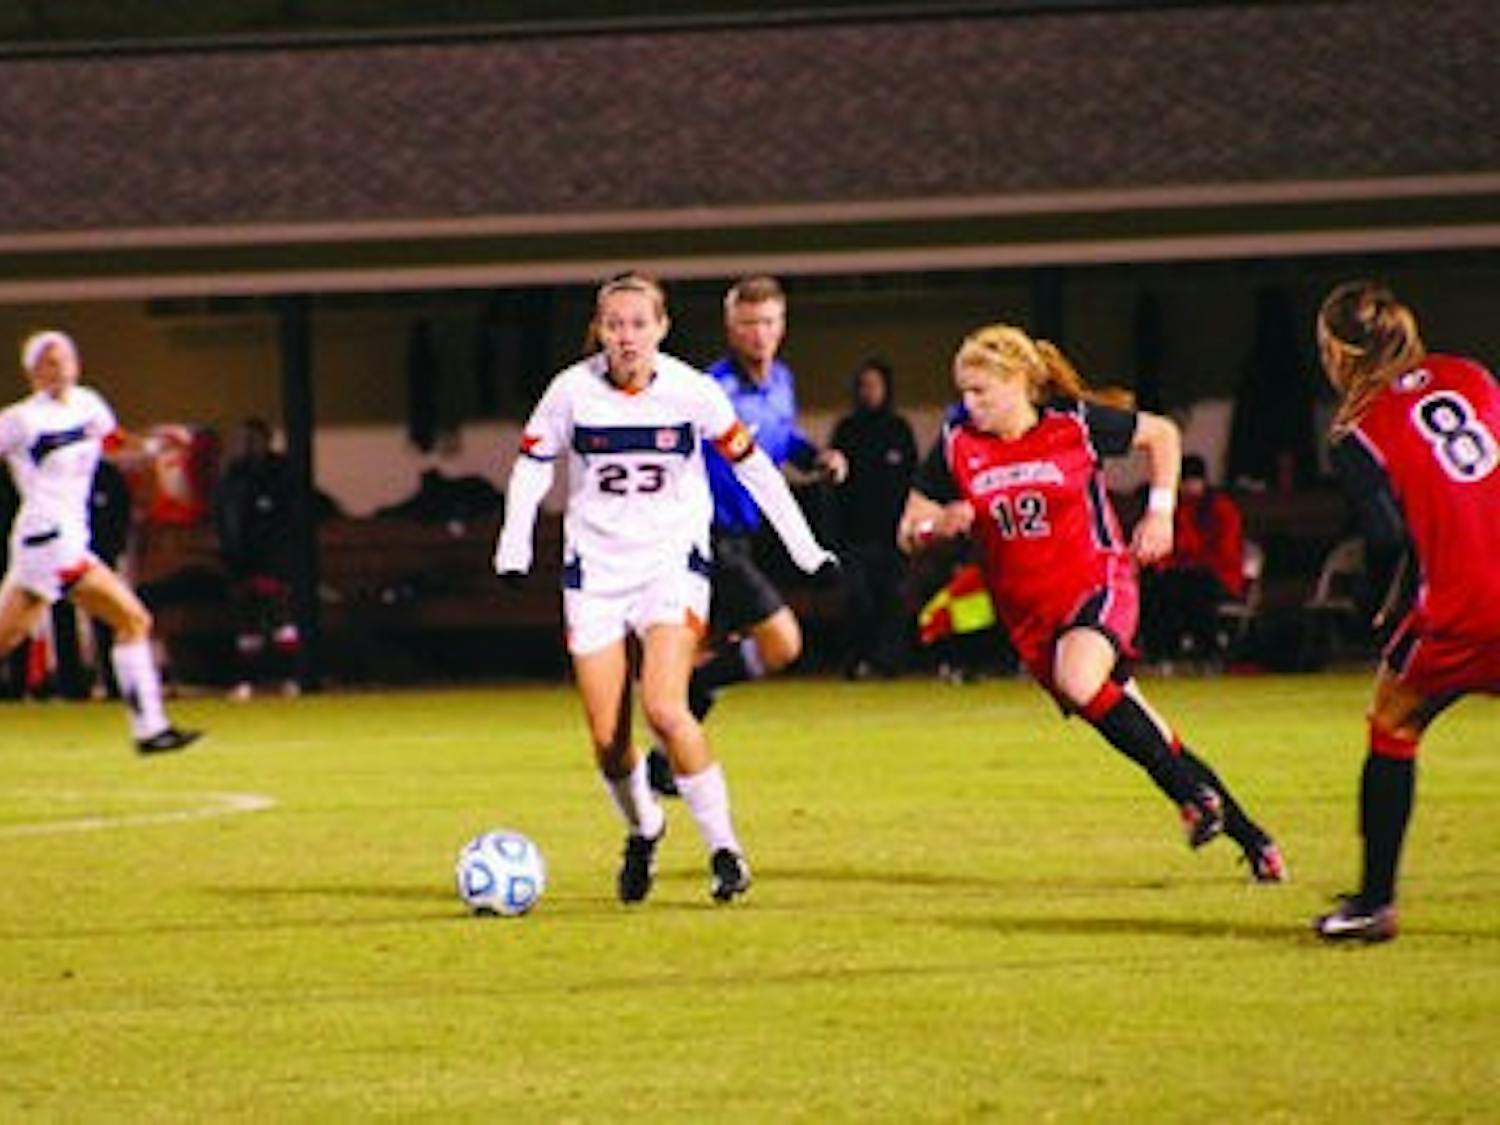 Senior midfielder Katy Frierson keeps the ball from Georgia's Susannah Dennis and Jamie Pollock. (Alex Sager / ASSOCIATE PHOTO EDITOR)